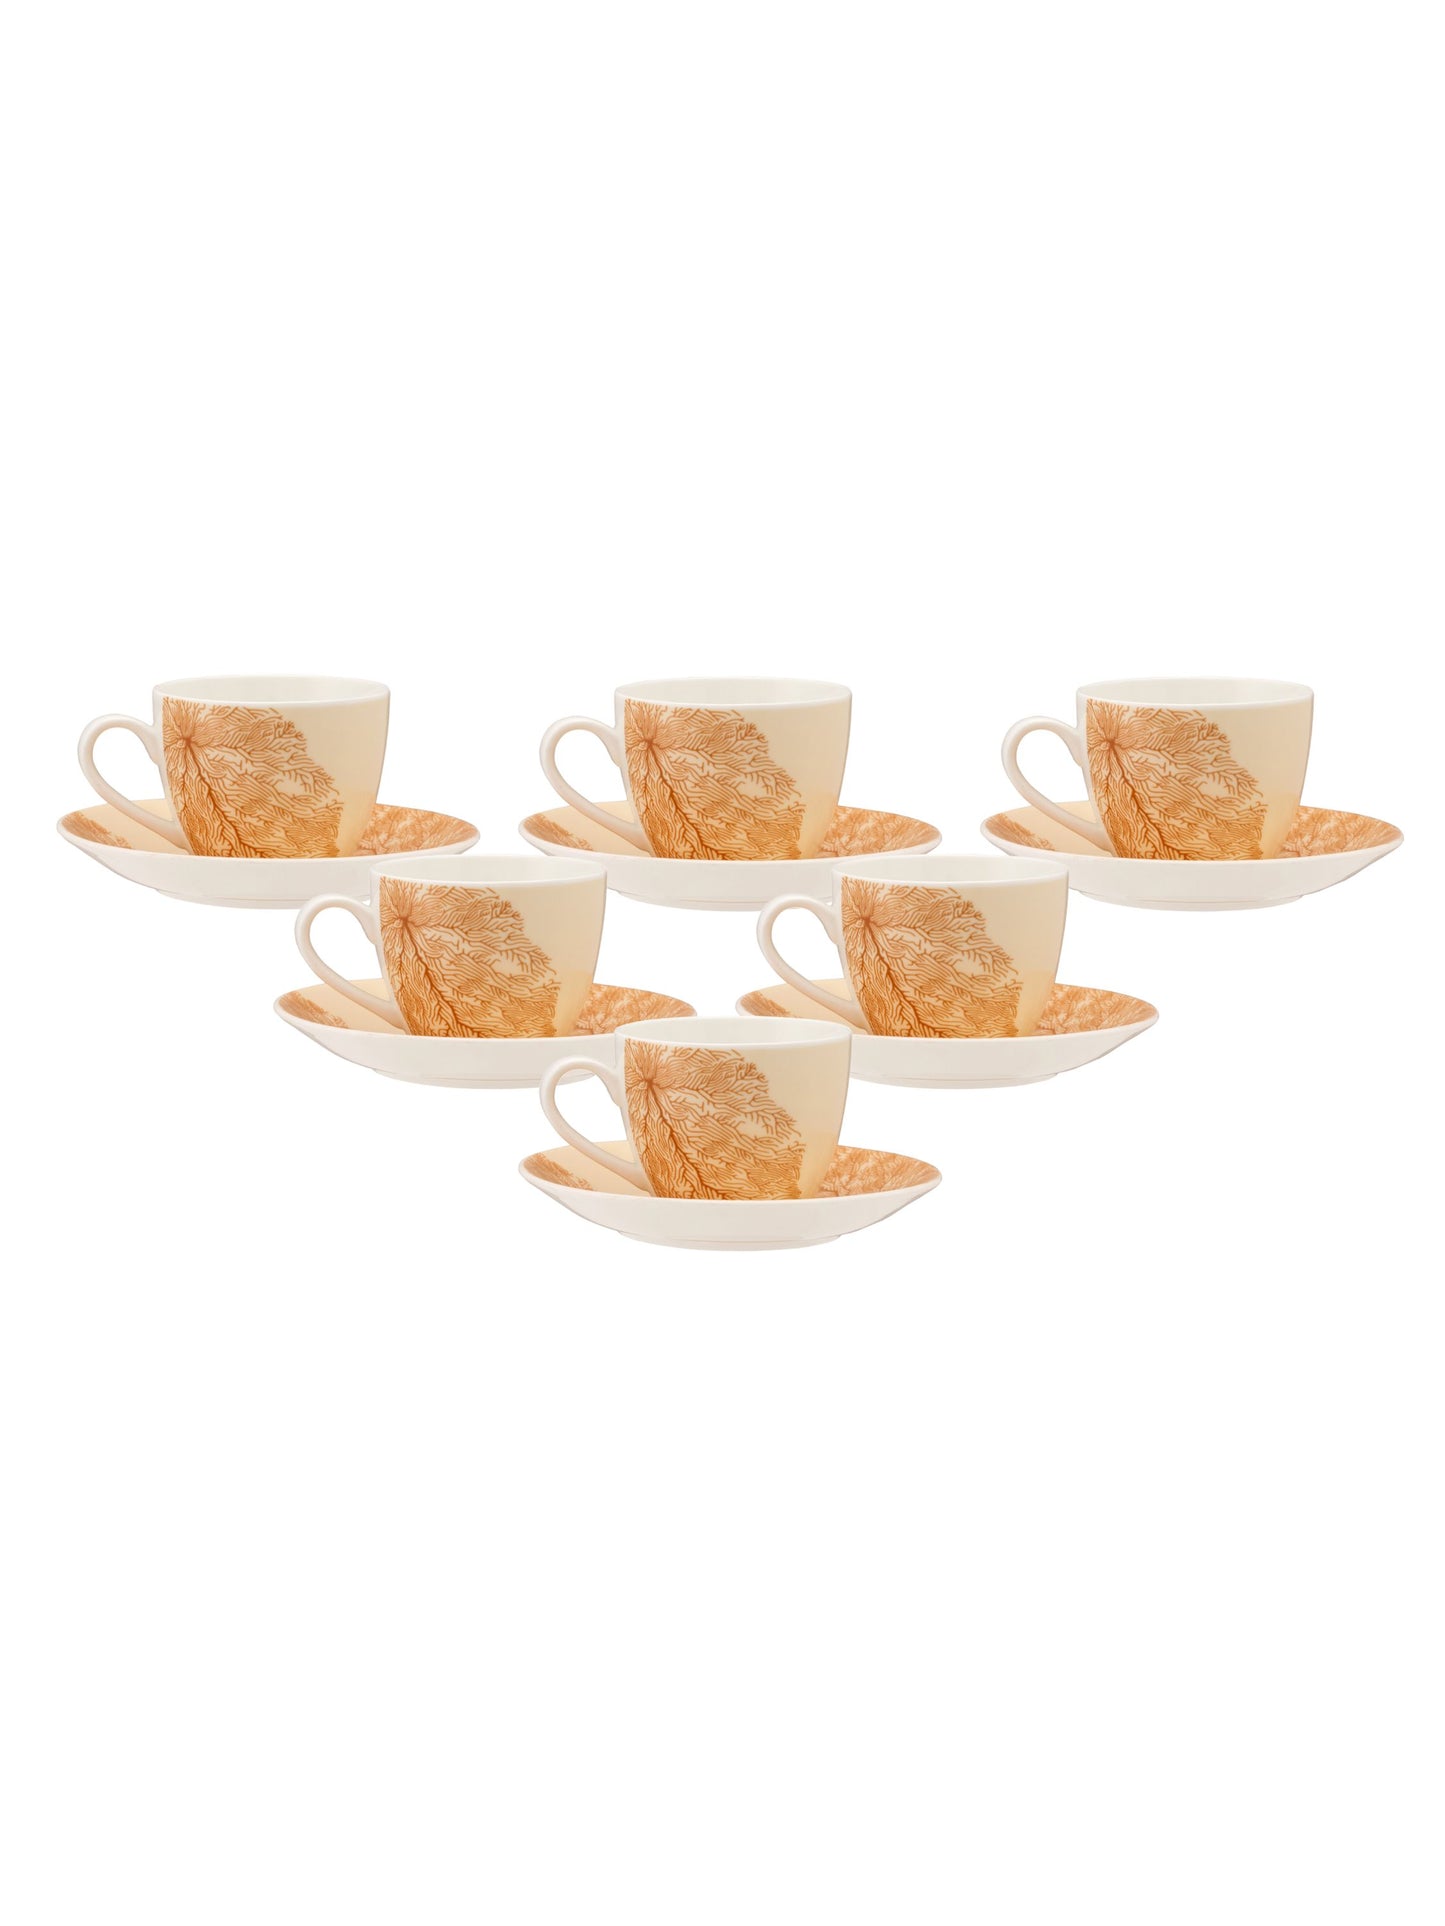 JCPL Cream Vanilla Cup & Saucer, 170ml, Set of 12 (6 Cups + 6 Saucers) (V414)